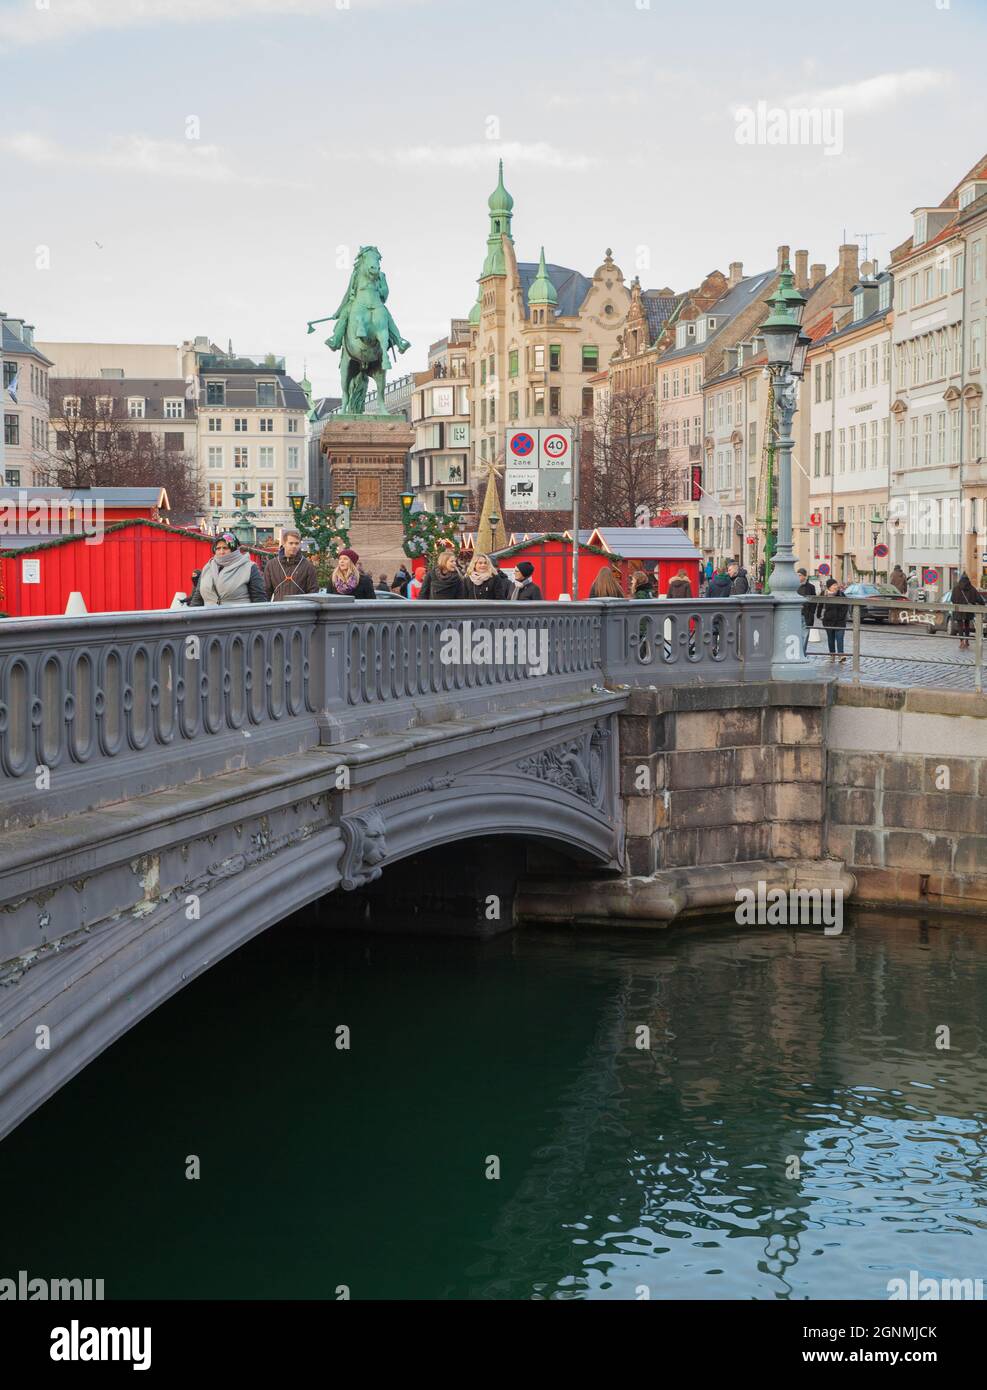 Copenaghen, Danimarca - 10 dicembre 2017: Vista sulla strada con il ponte Hojbro sul canale Slotsholm. La gente comune cammina la strada, foto verticale Foto Stock